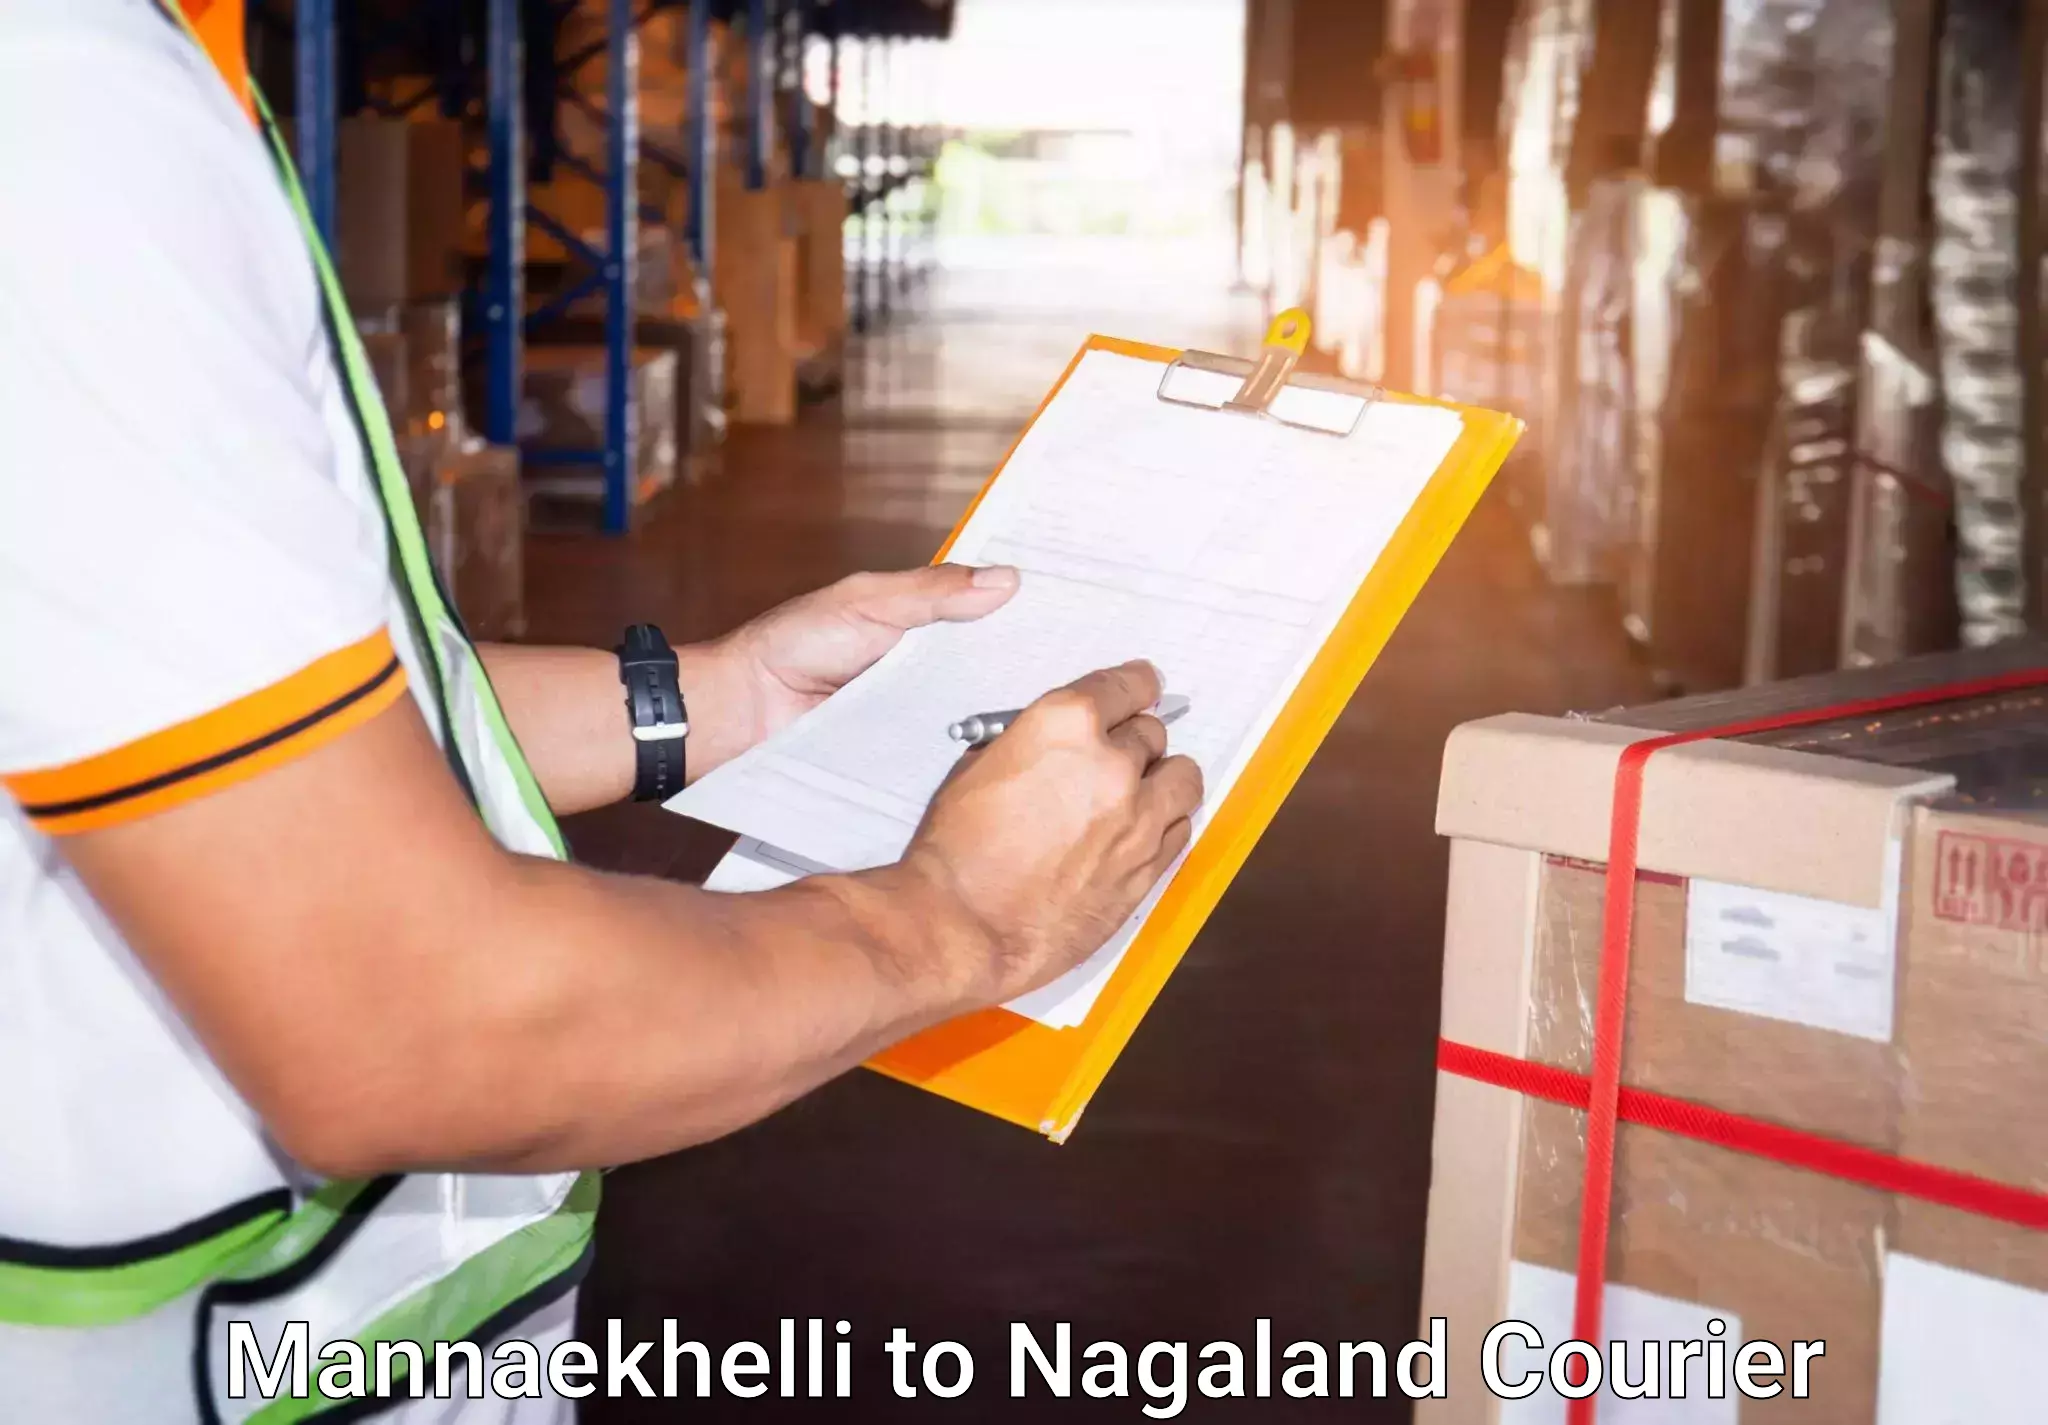 Baggage transport innovation Mannaekhelli to Nagaland